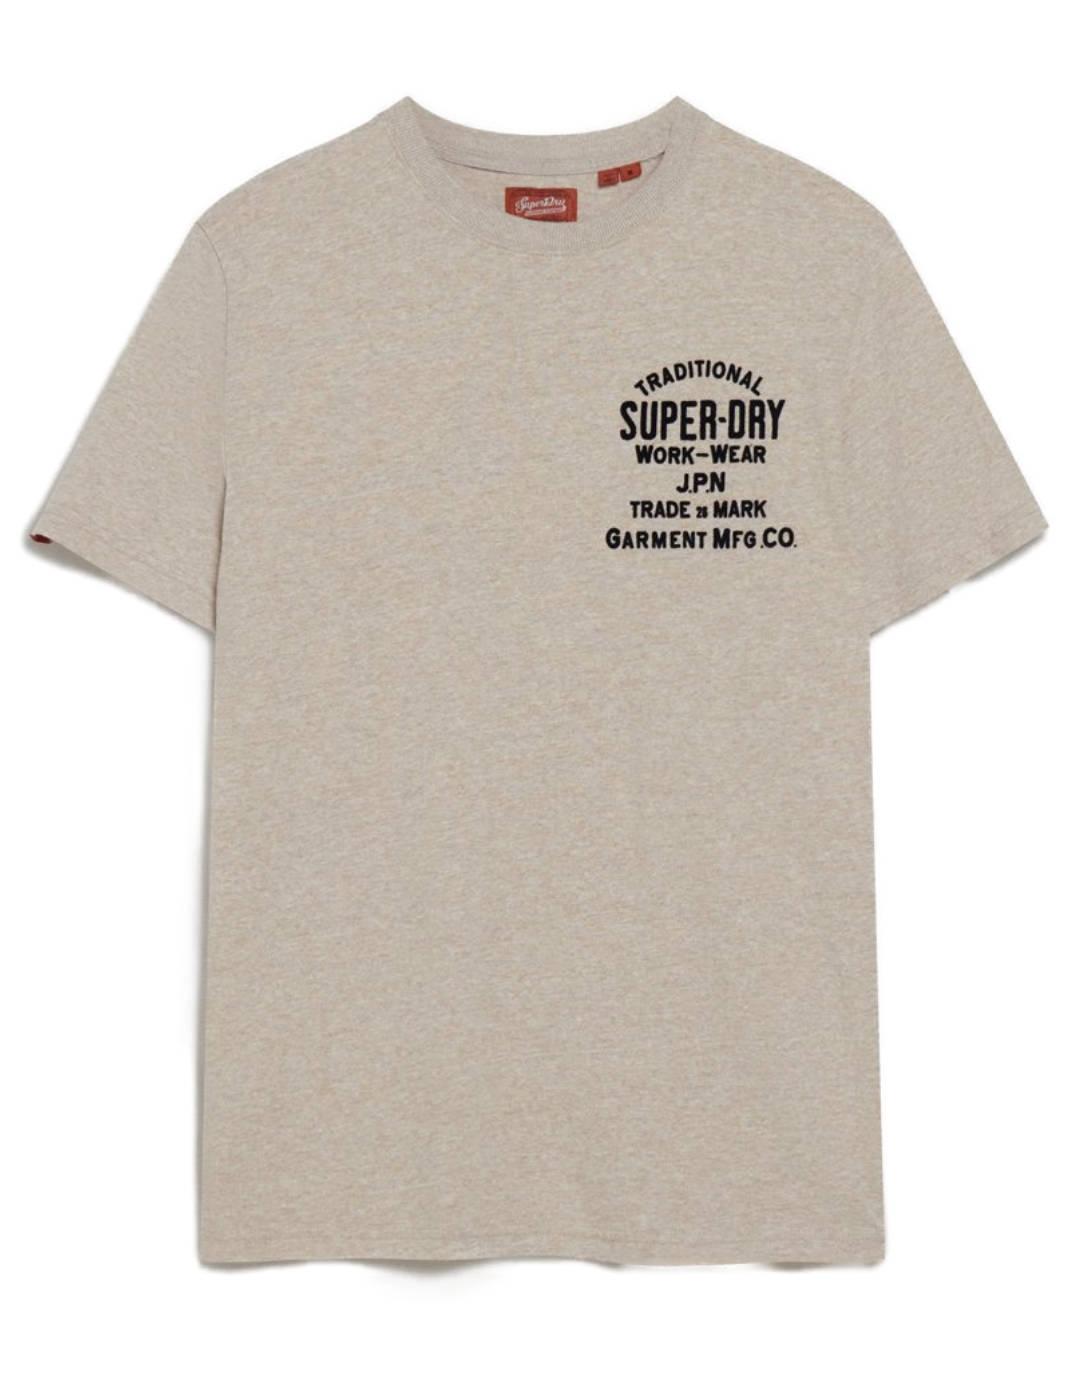 Camiseta Superdry Workwear beige manga corta para hombre